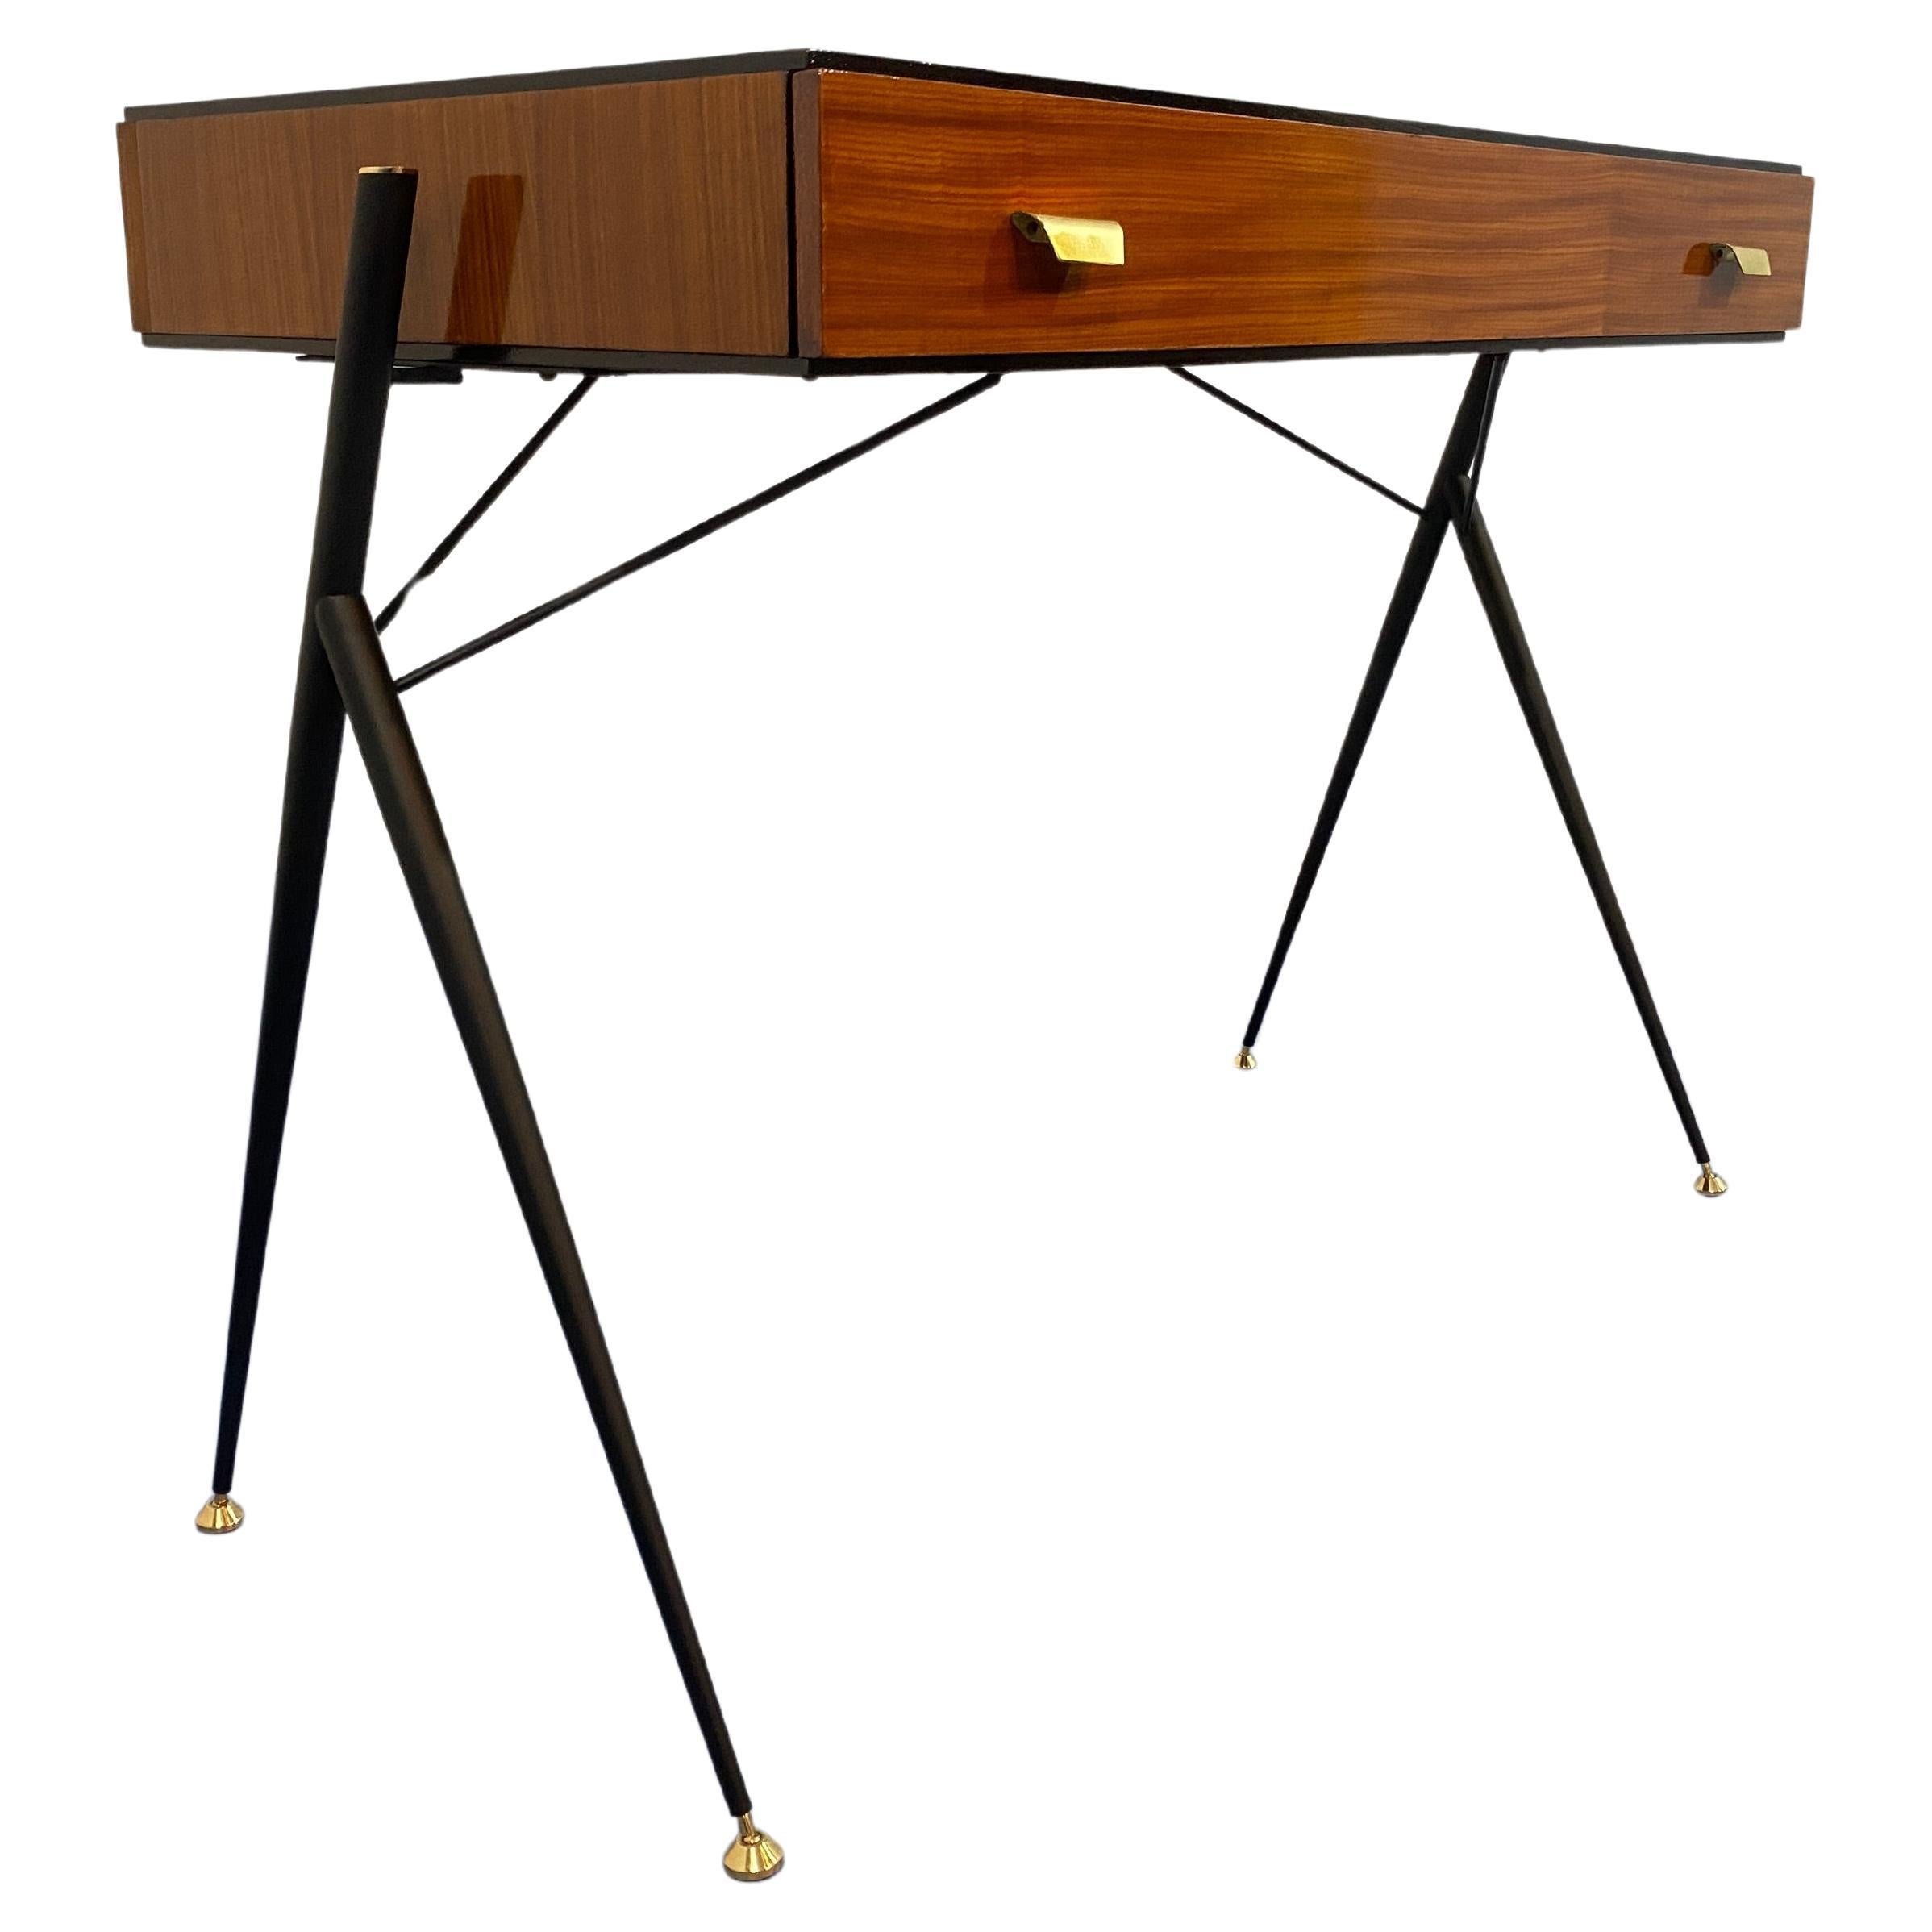 Italian Mid century Modern desk designed by Silvio Cavatorta in 1950s